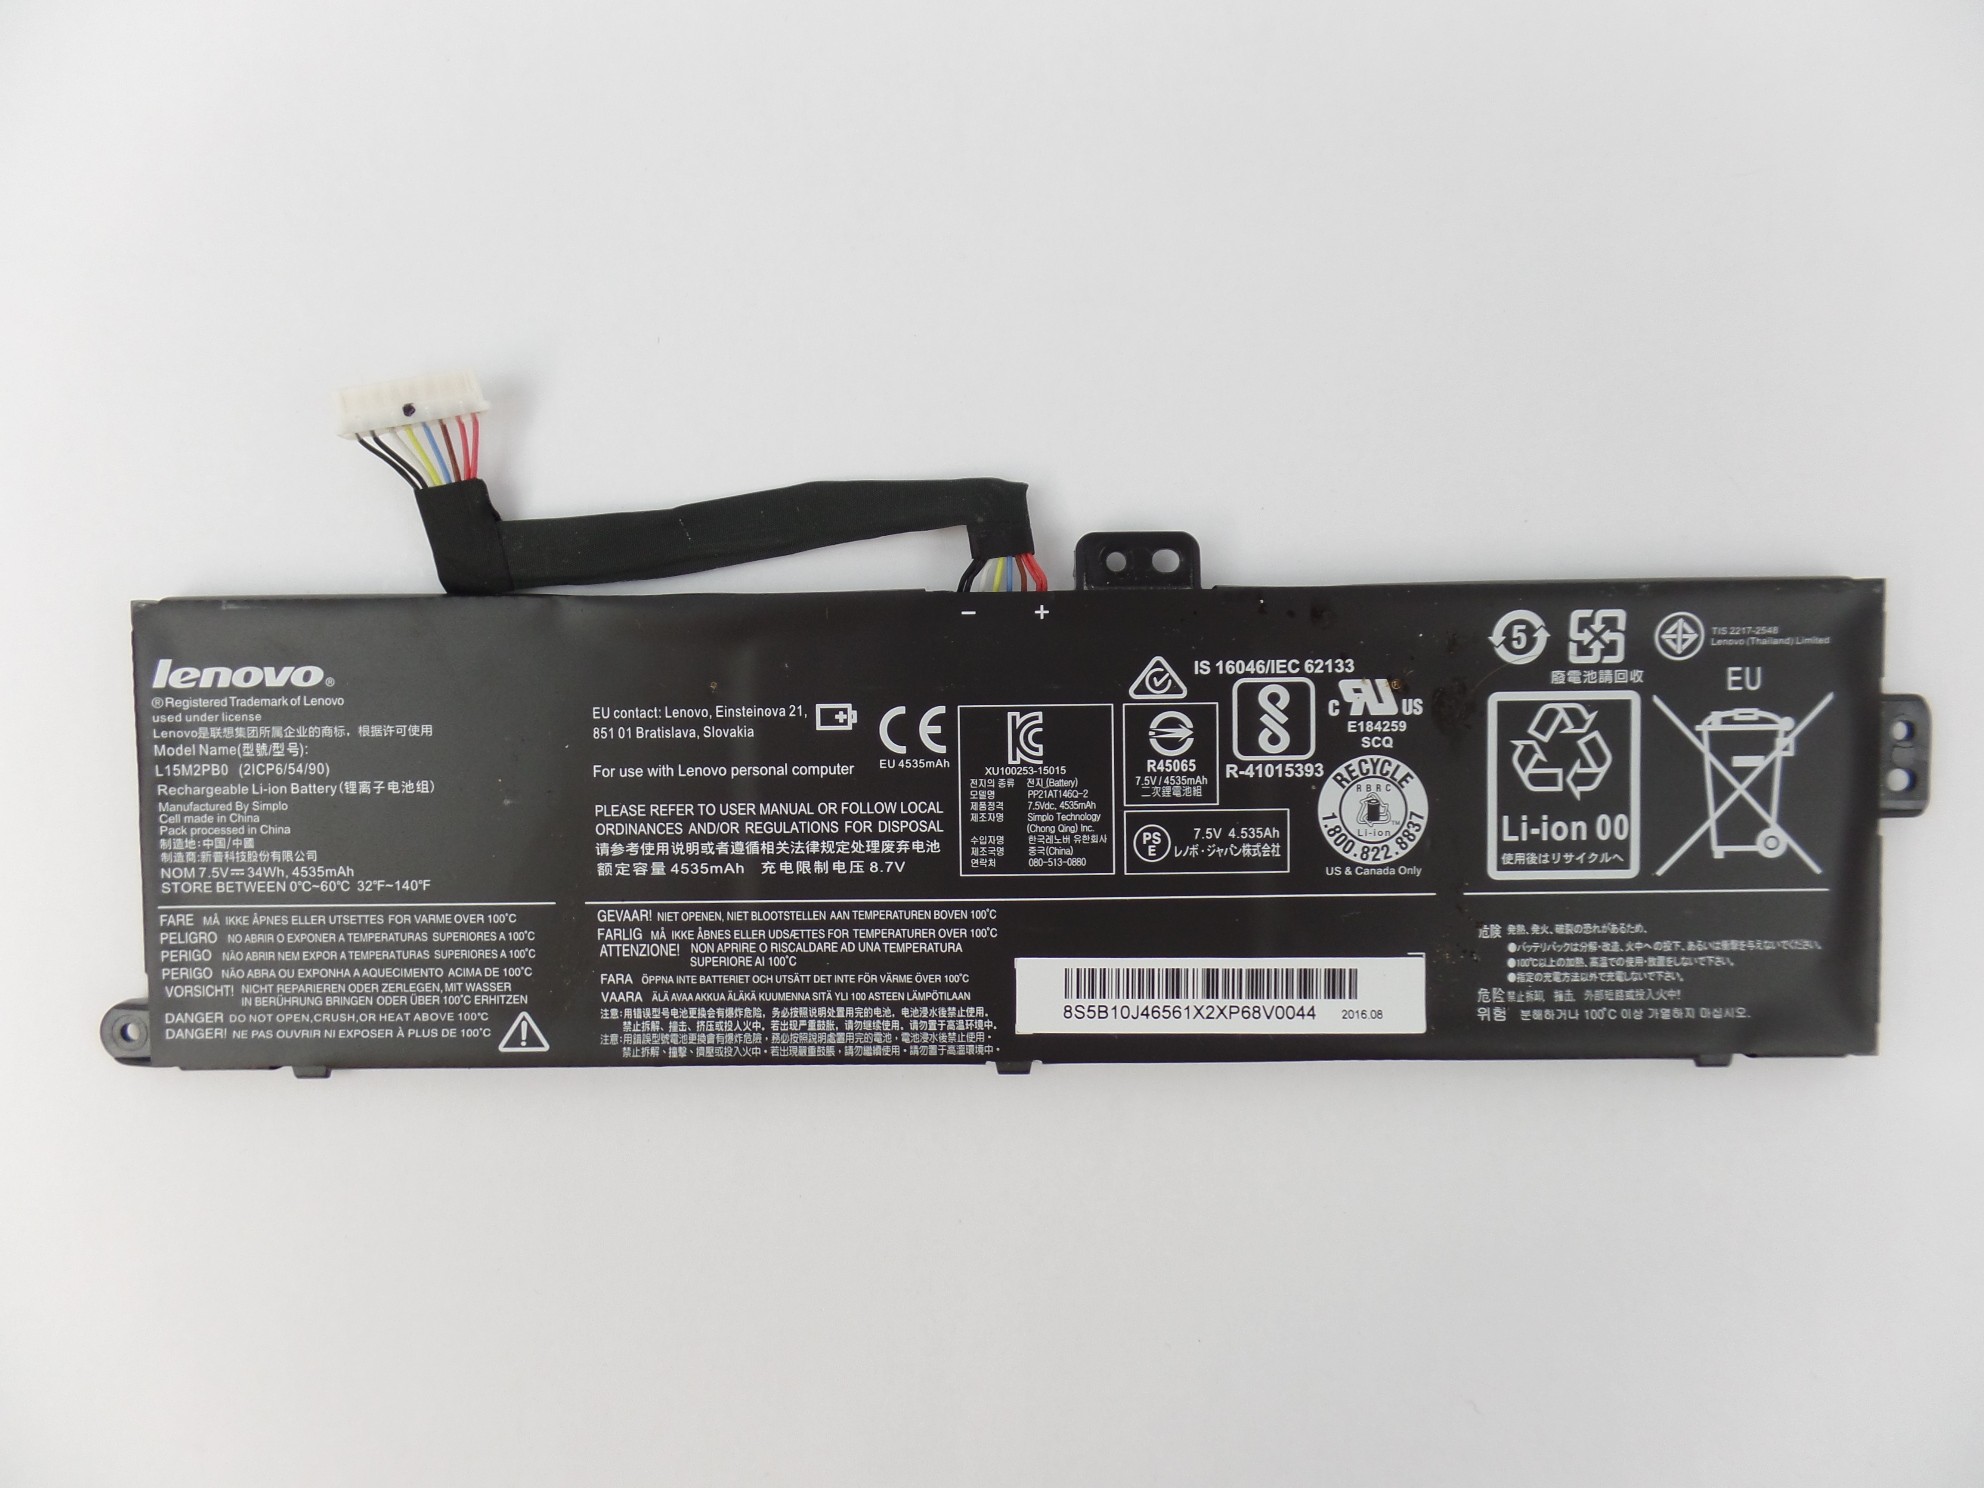 OEM Genuine Battery L15M2PB0 8S5B10J46561 for Lenovo Chromebook 100S